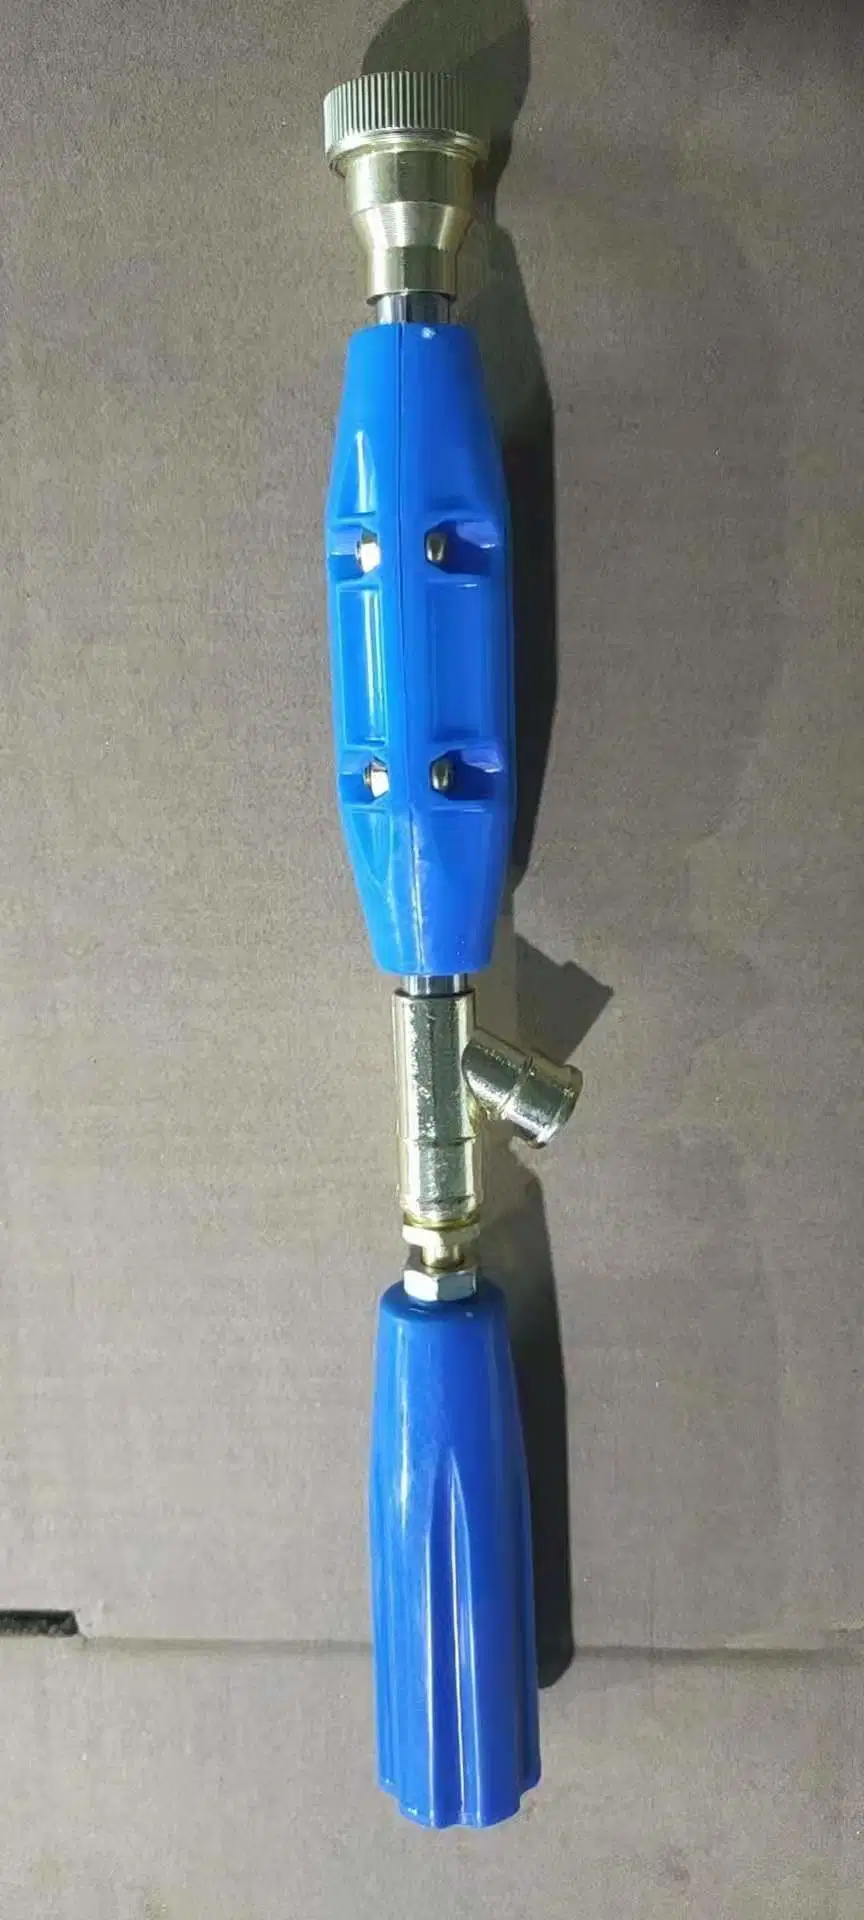 Skyagri Spray Gun Sprayer Spare Parts Agricltural Use Pesticide and Farm Parts 25cm 30cm 45cm